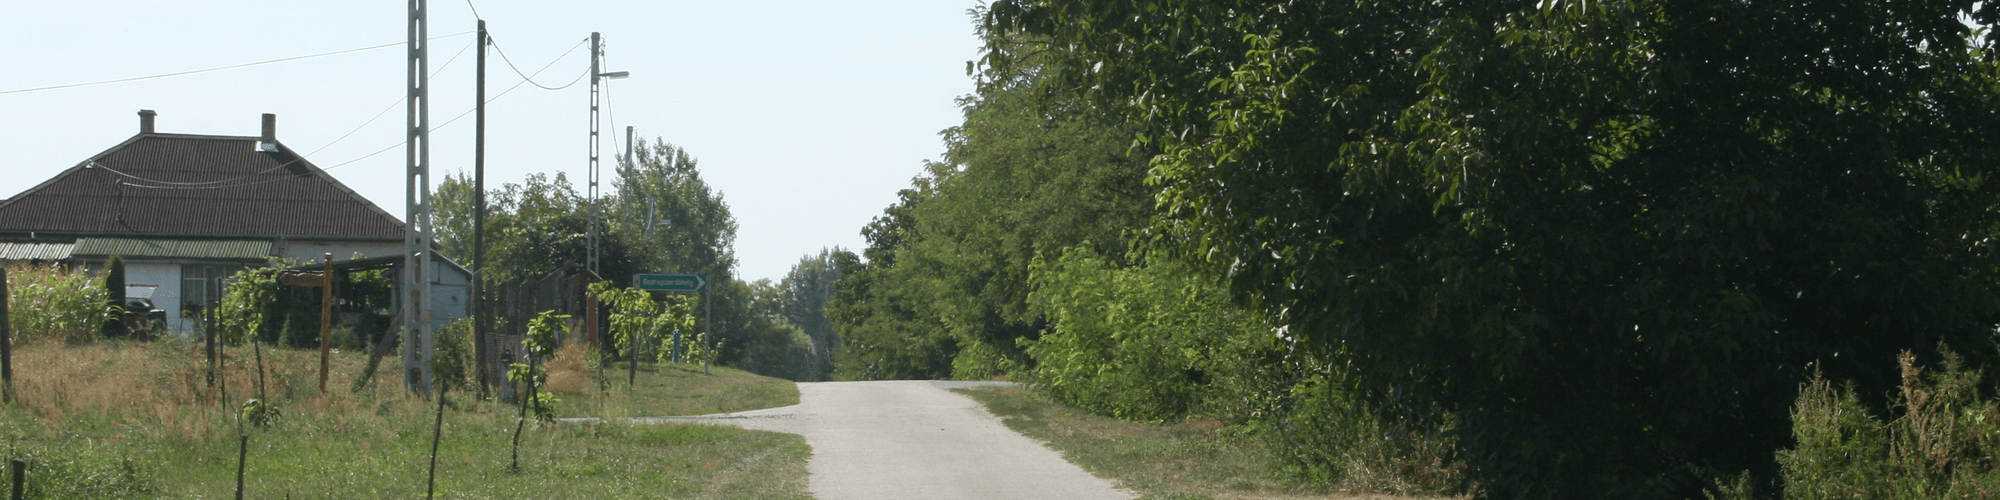 Road with trees in the Košice Region